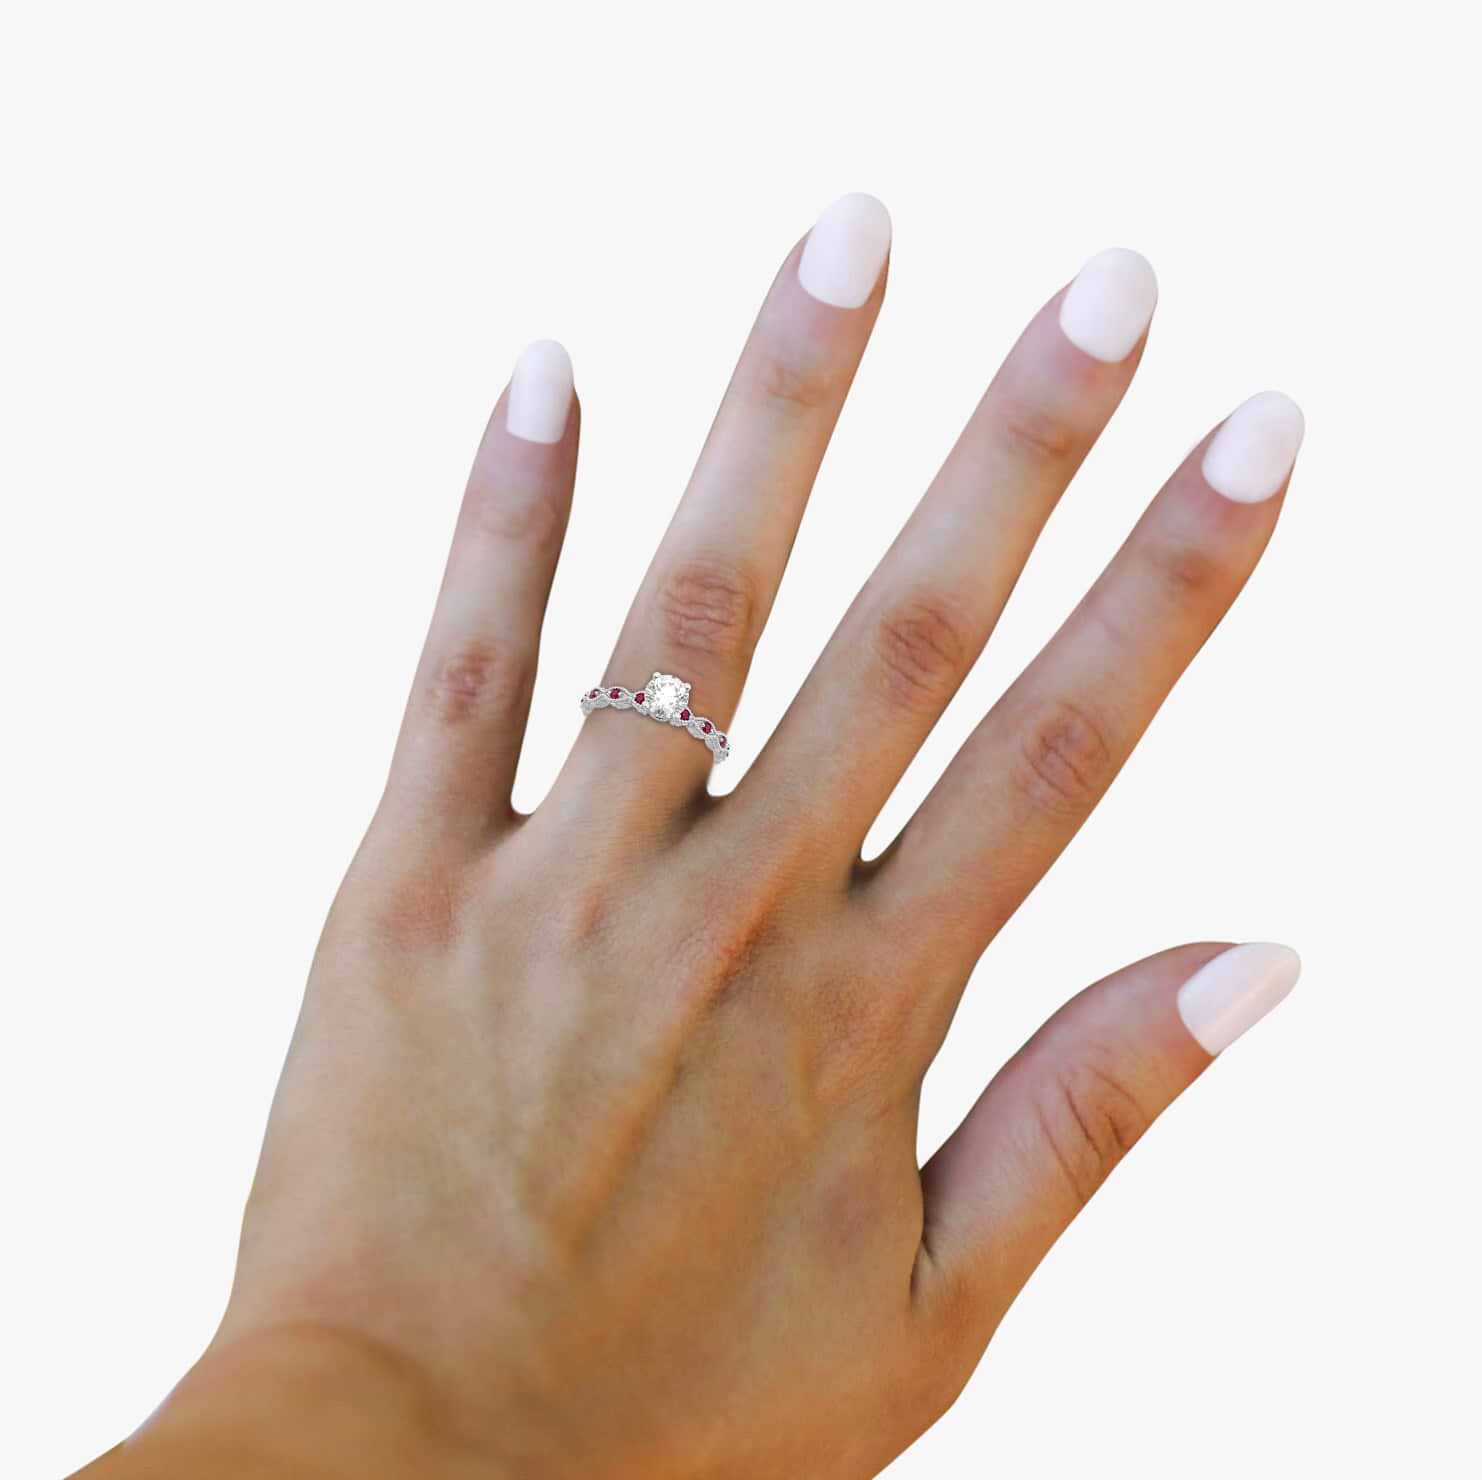 Vintage Diamond & Ruby Engagement Ring 18k White Gold 0.75ct